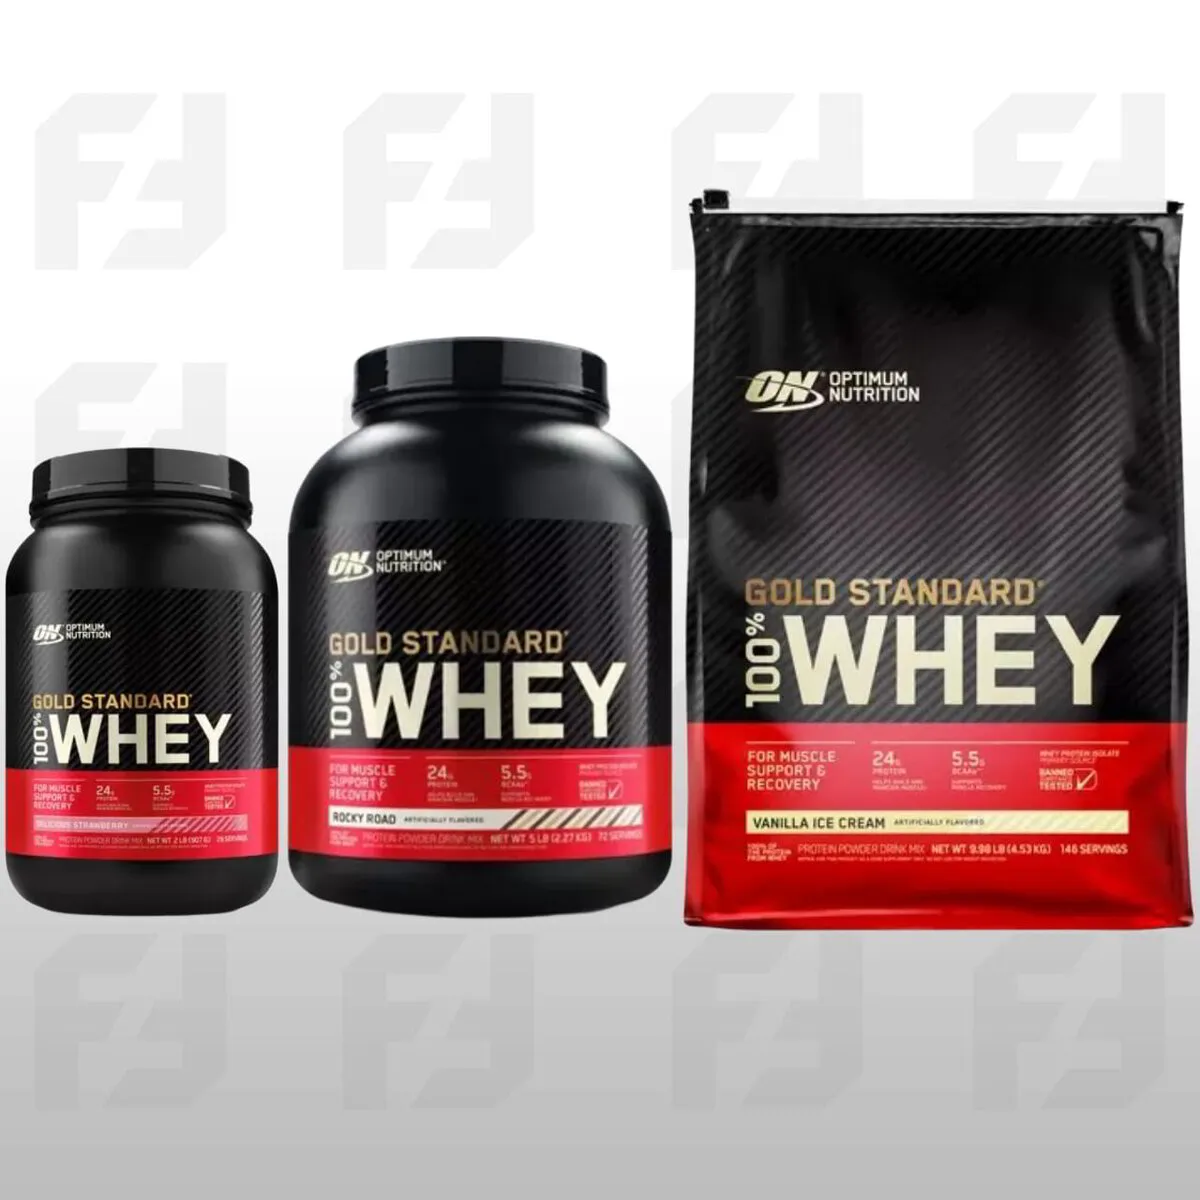  Gold Standard Whey |  Optimum Nutrition 